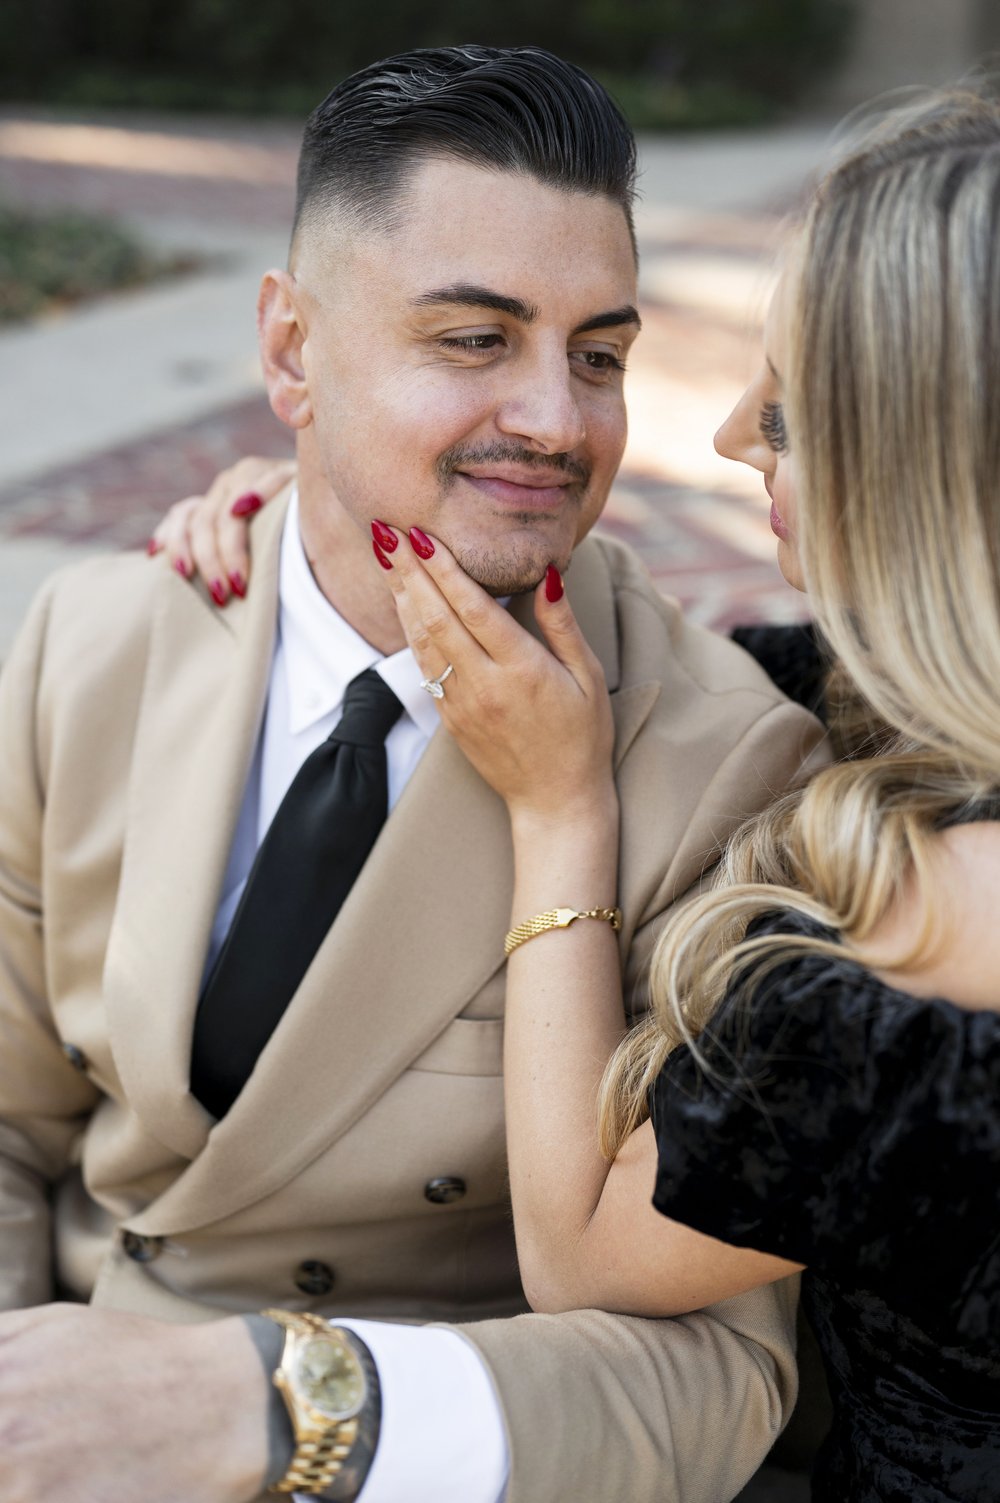 girl caressing face of man during engagement photos